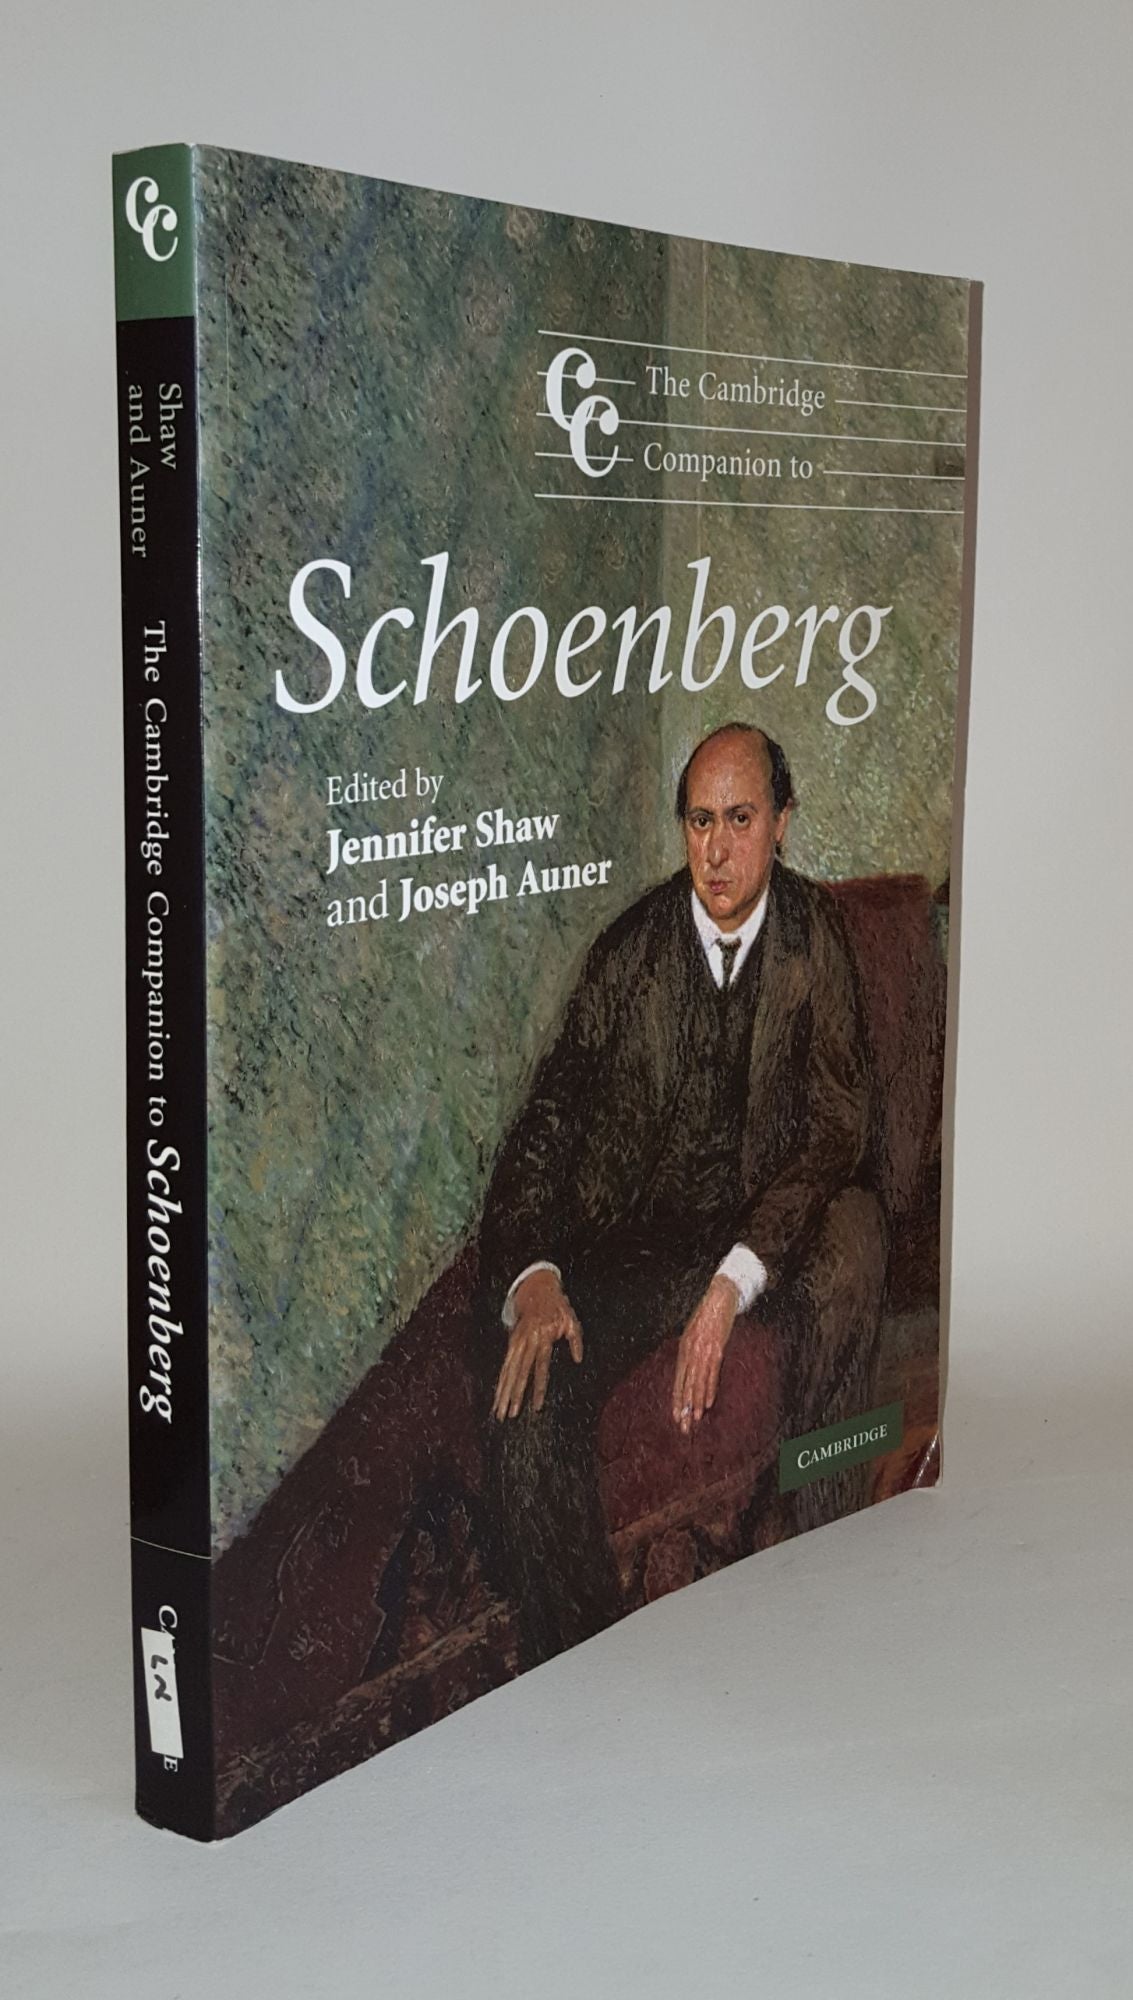 SHAW Jennifer - The Cambridge Companion to Schoenberg